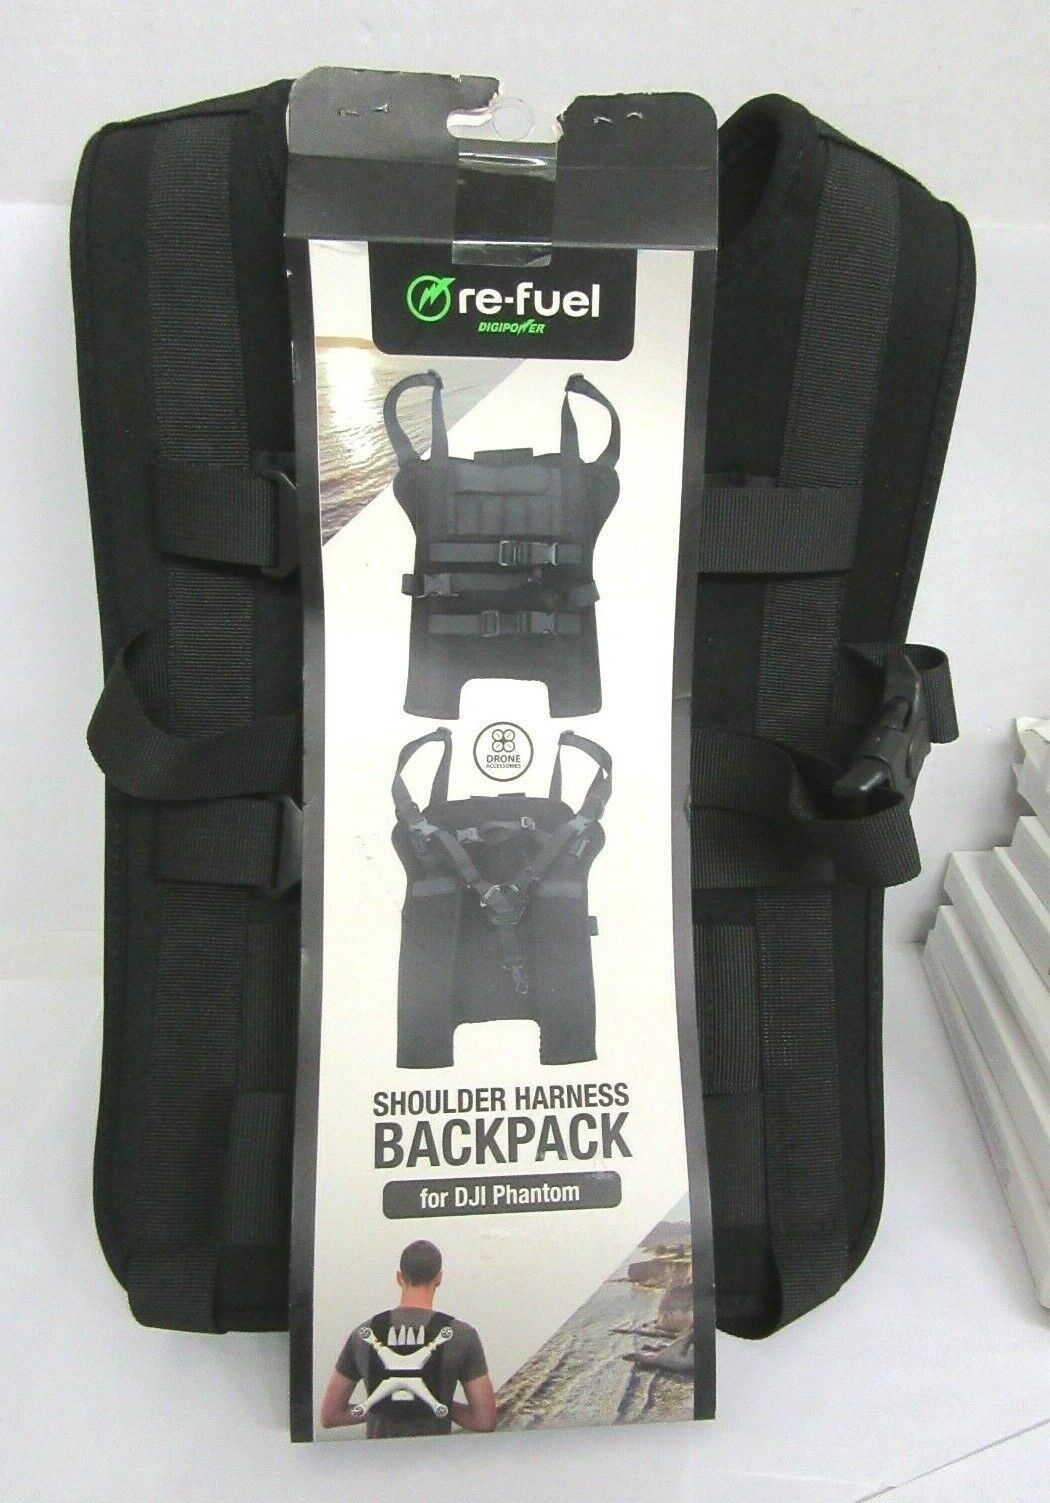 Digipower - Re-Fuel Shoulder Harness Backpack for DJI Phantom Drones - $19.34